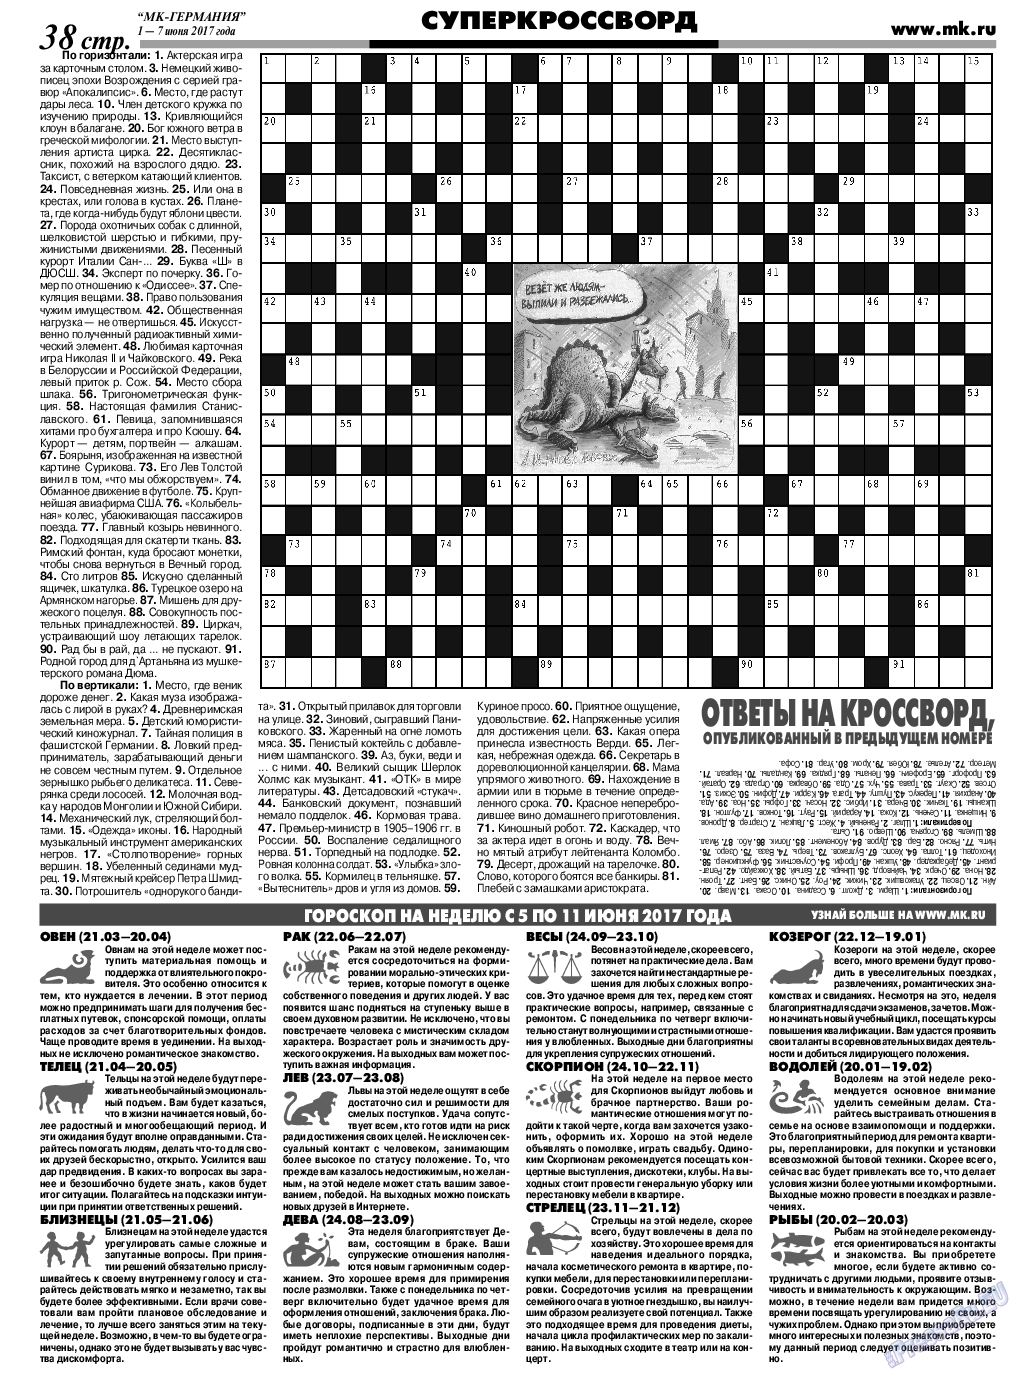 МК-Германия, газета. 2017 №23 стр.38